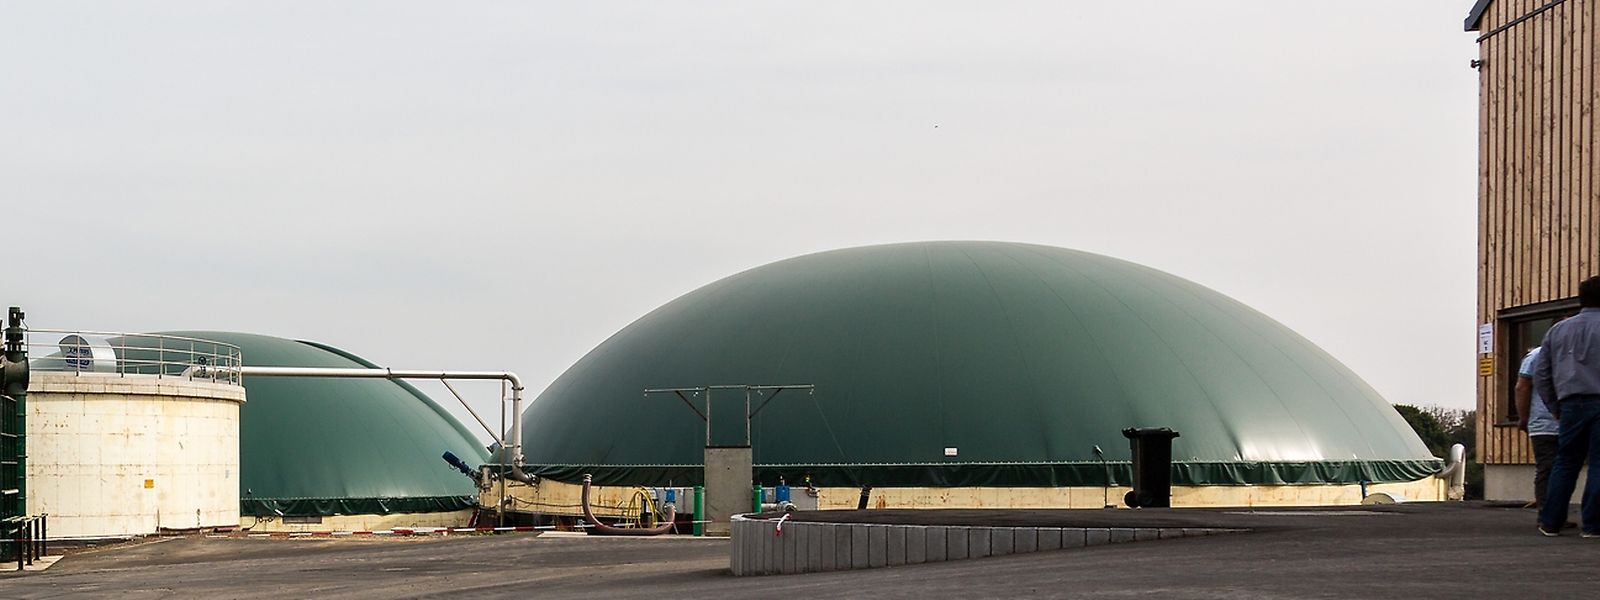 Die Biogasanlage in Gonderingen ging Ende 2015 in Betrieb.